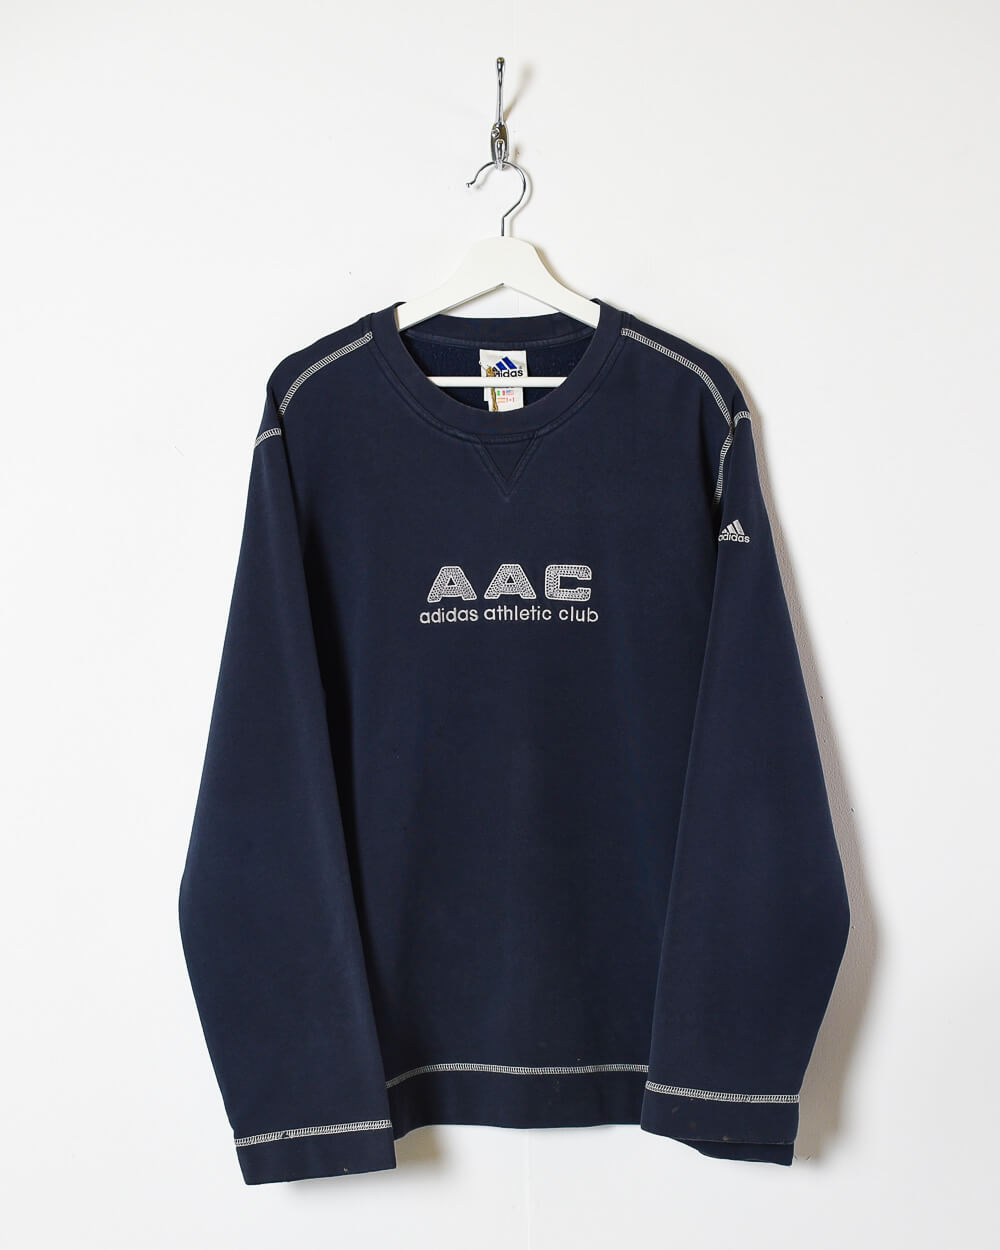 Navy Adidas Athletic Club Sweatshirt - X-Large